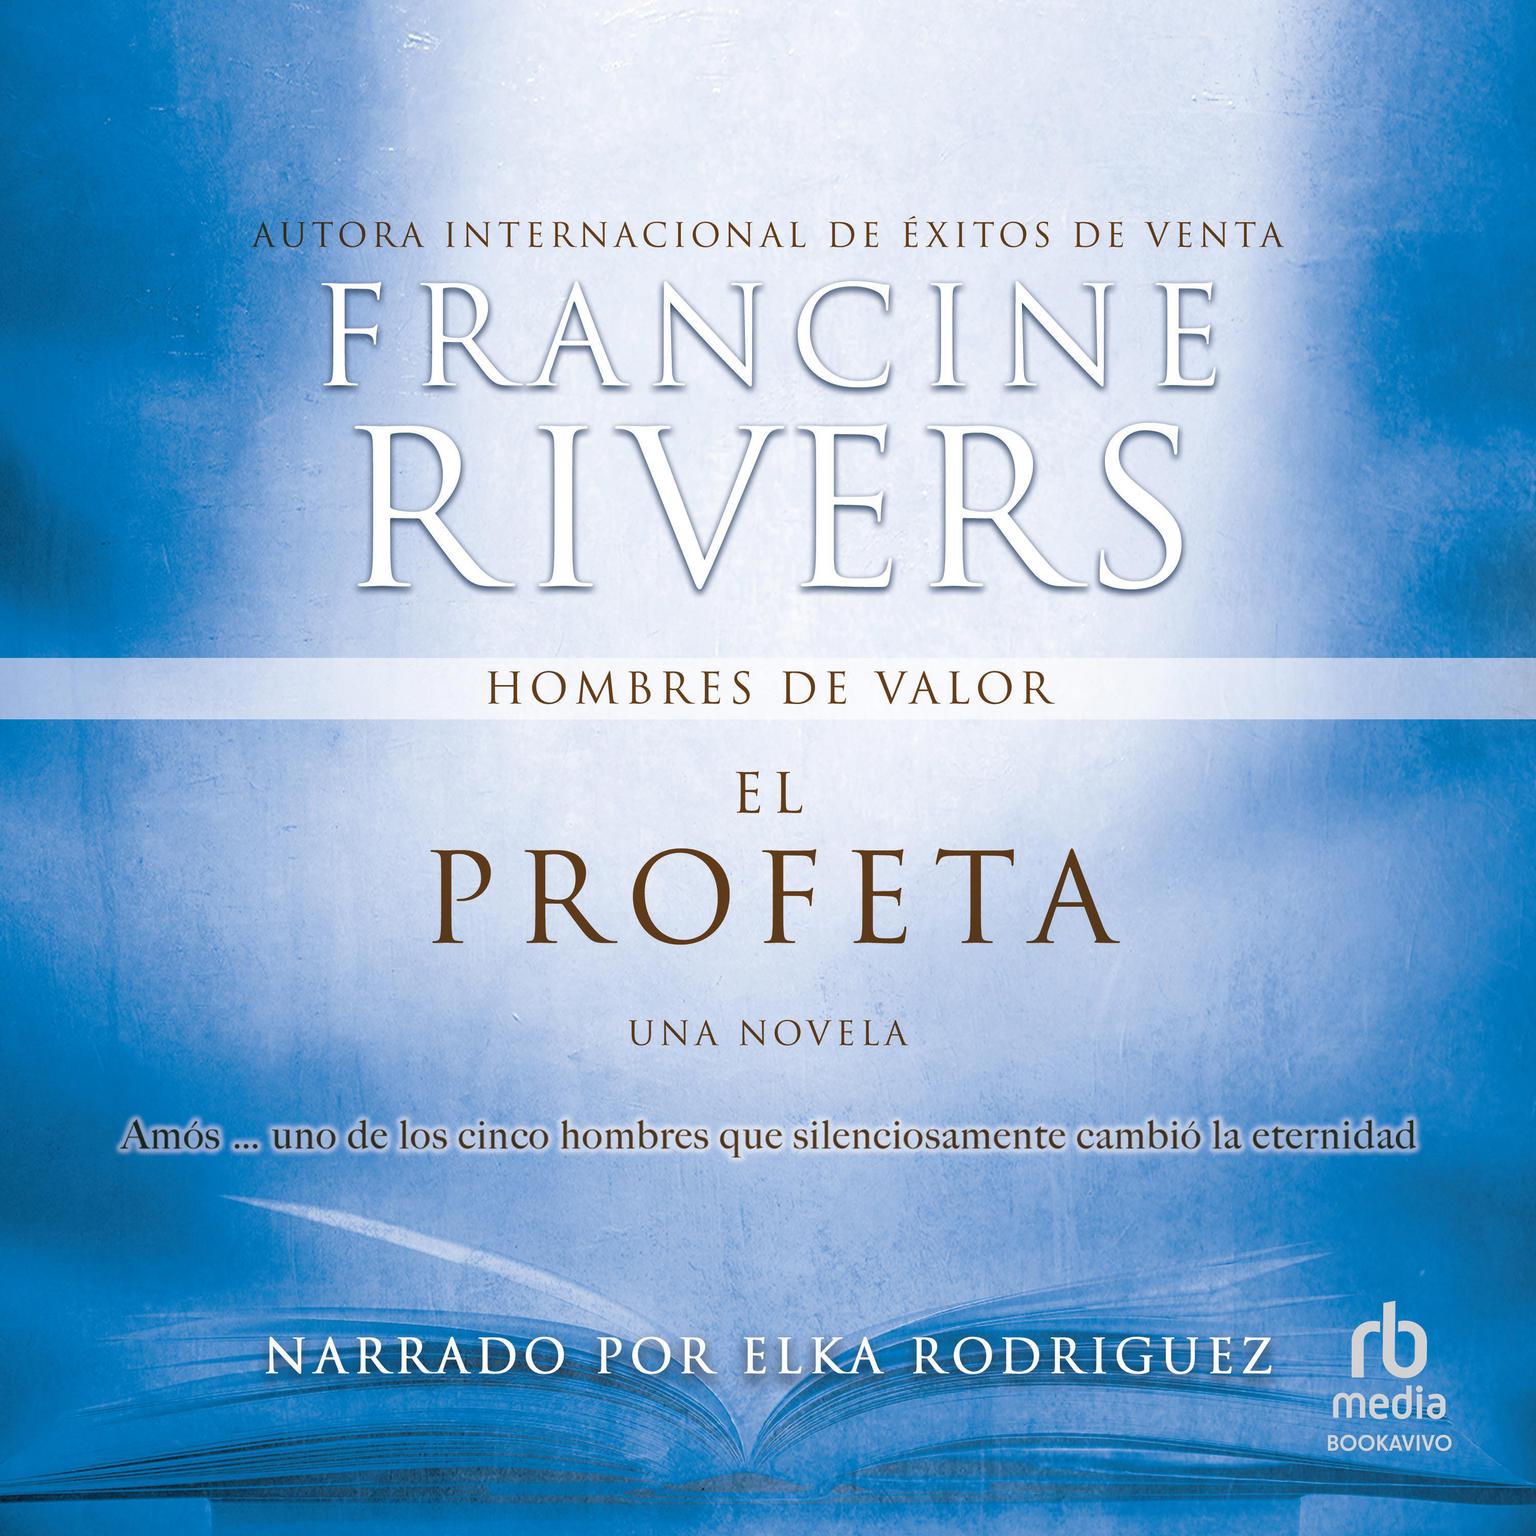 El Profeta (The Prophet): Amos Audiobook, by Francine Rivers